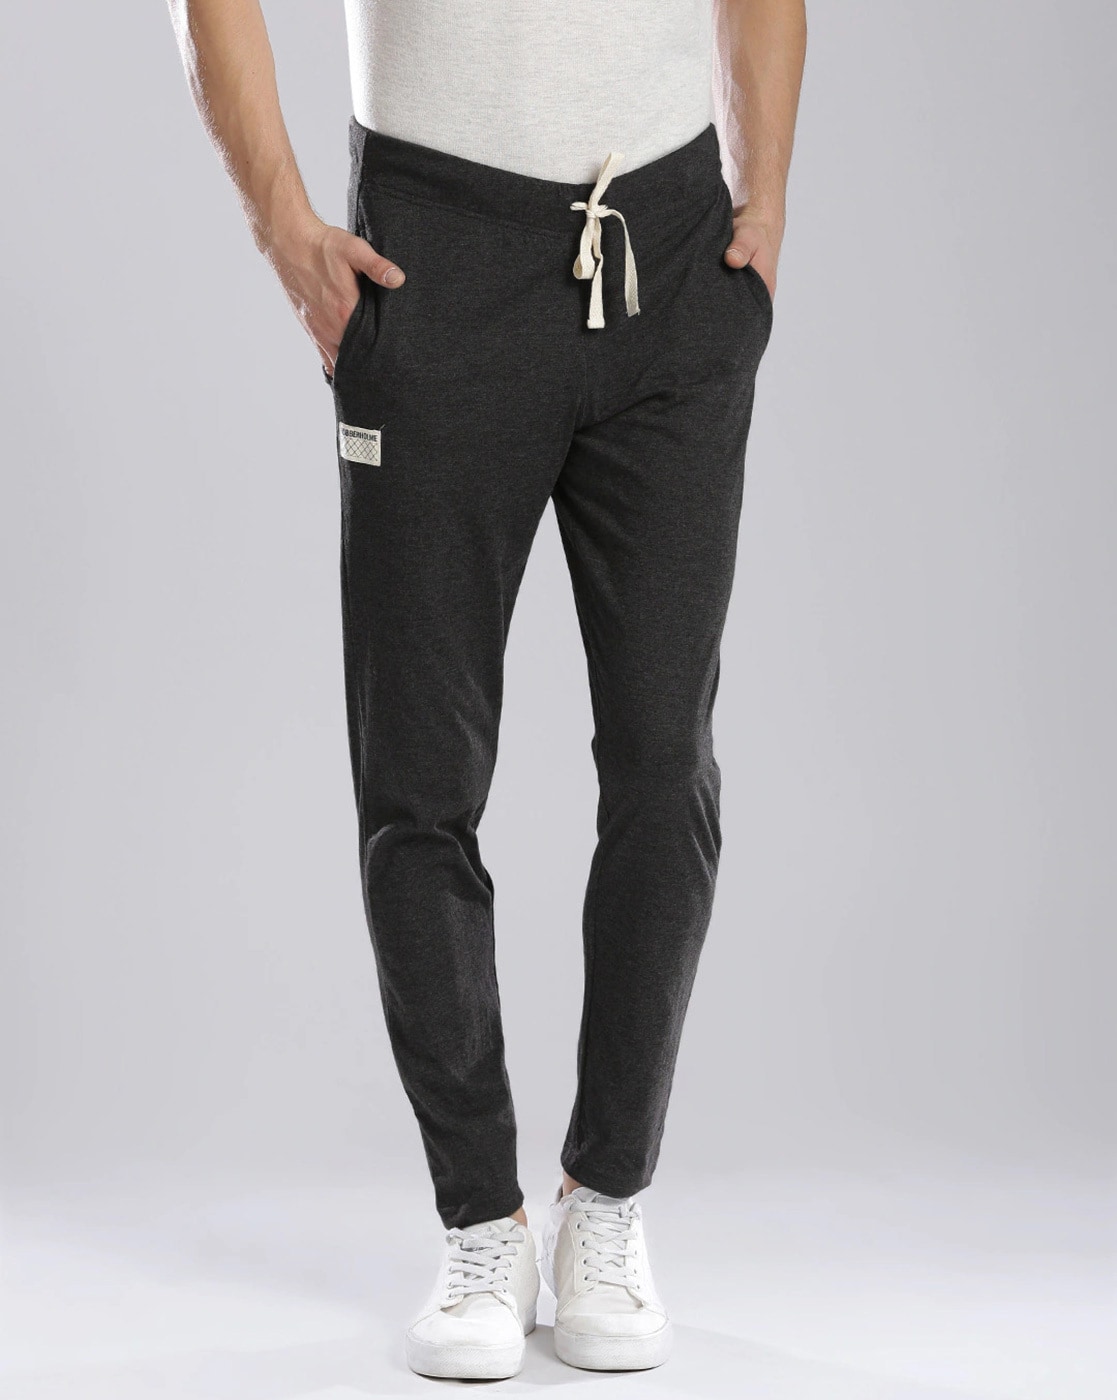 Buy Hubberholme Black Slim Fit Joggers for Mens Online @ Tata CLiQ